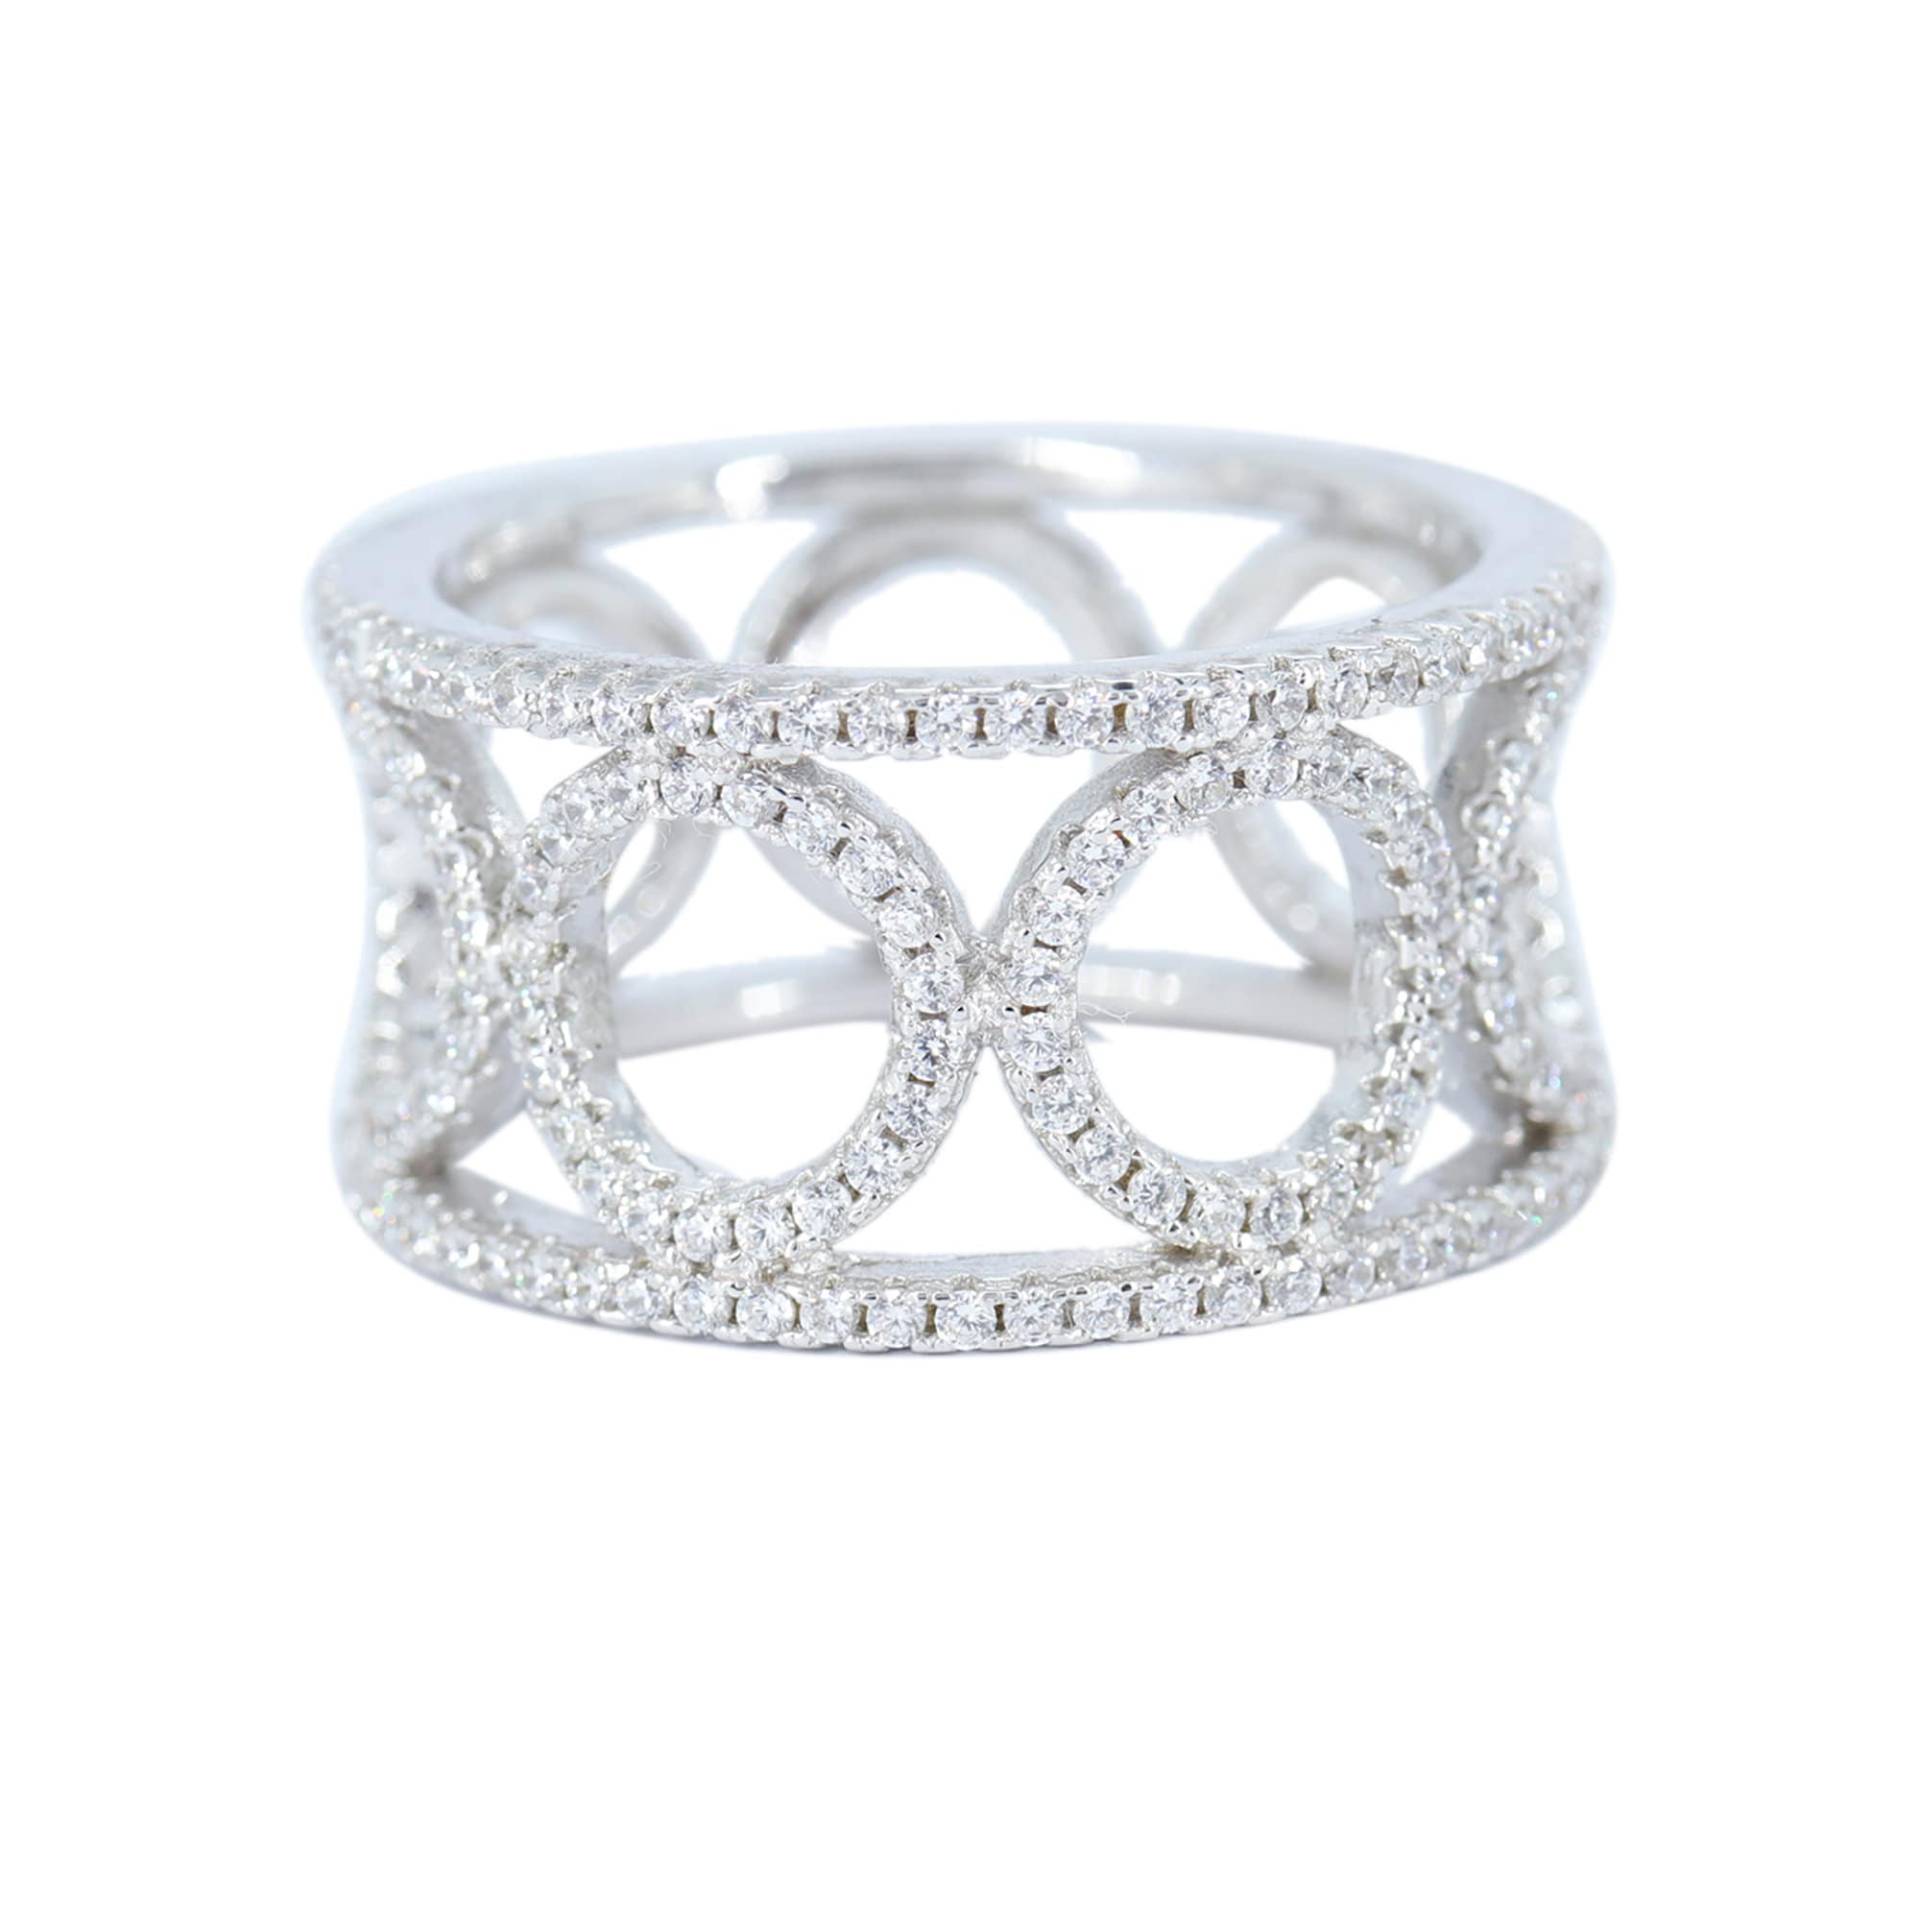 Cherish Wide Paved Cubic Zirkonia Versilbert Eternity Band Ring, Full Cz Diamond Cocktail Fashion Ehering Ring Für Sie von londonjewellers